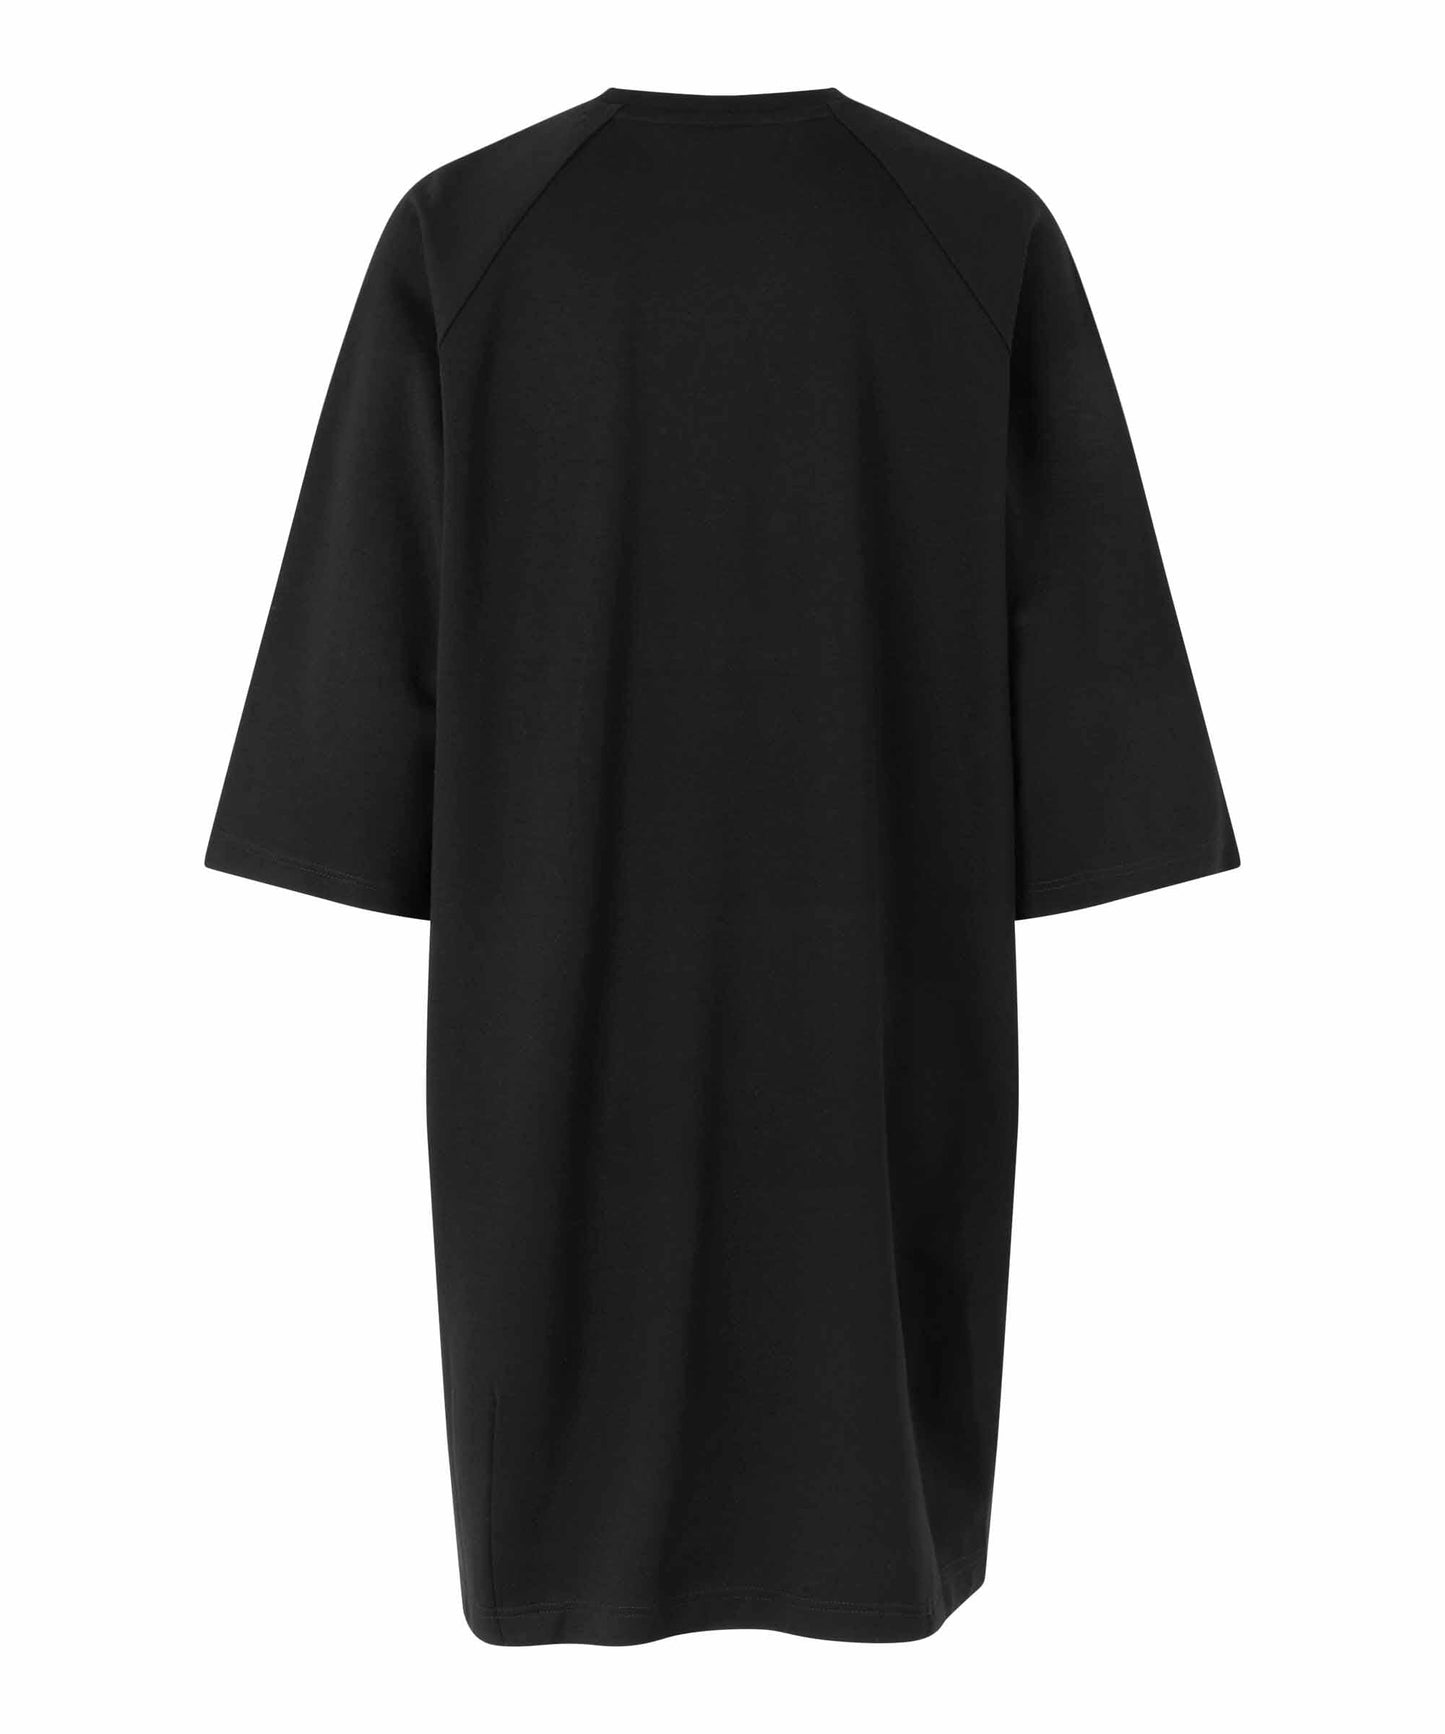 Naesa 1/2 Sleeve Dress in Black Dress Masai 